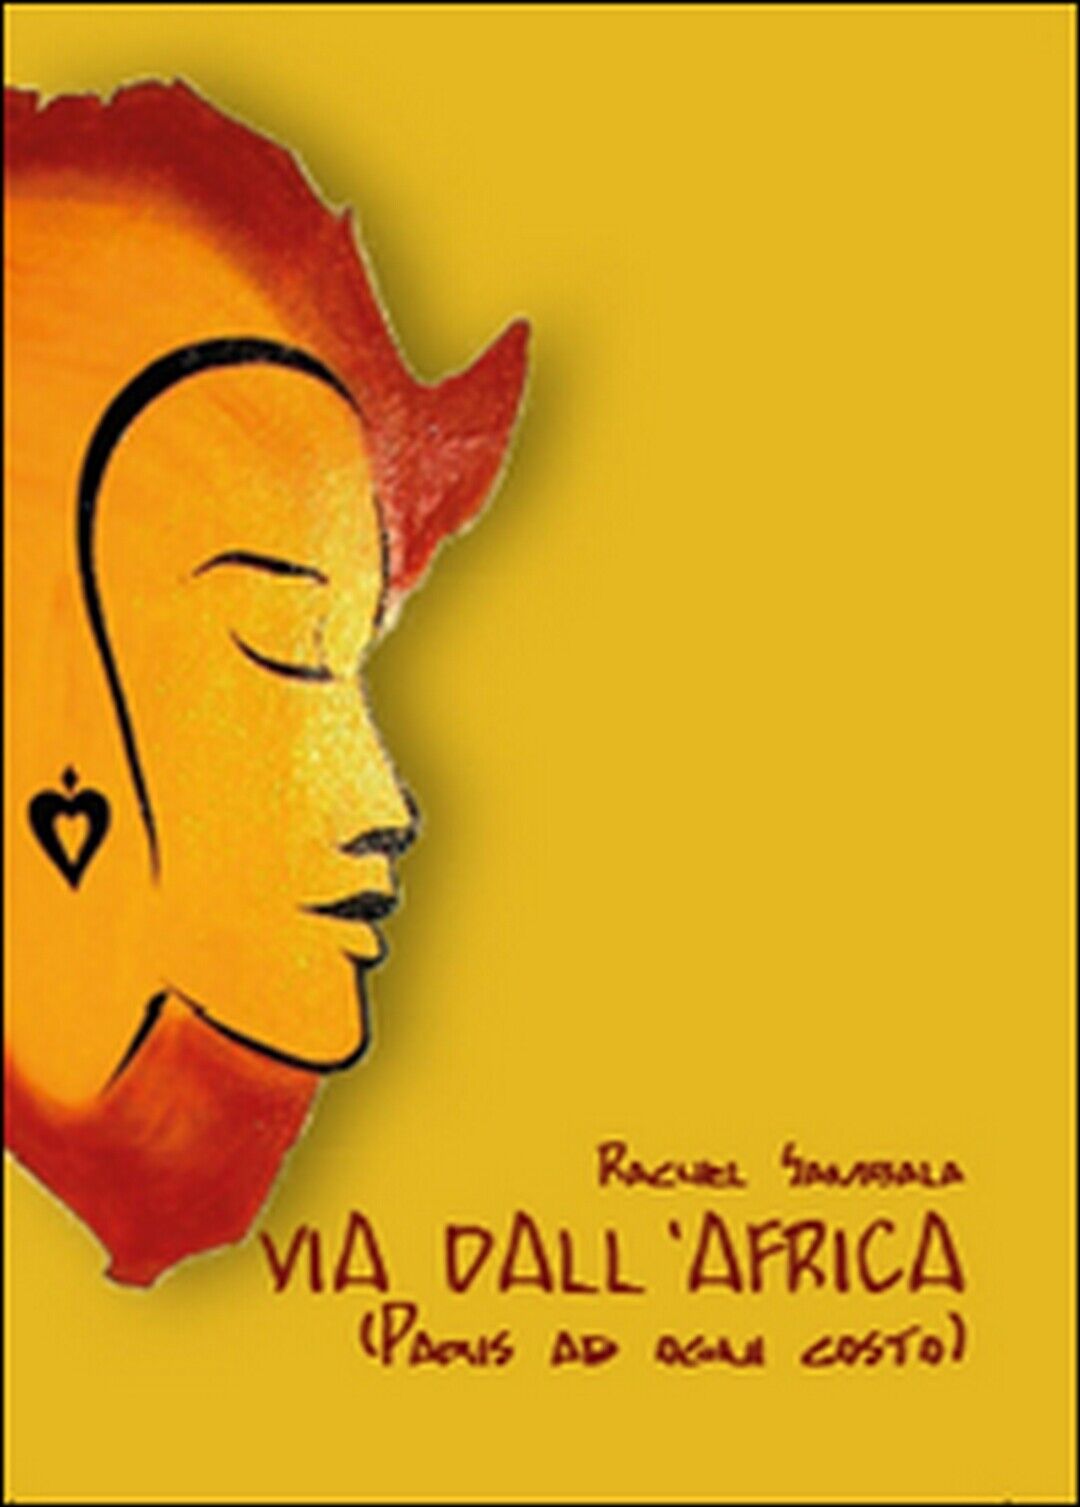 Via dalL'Africa (Paris ad ogni costo)  di Rachel Sambala,  2015,  Youcanprint